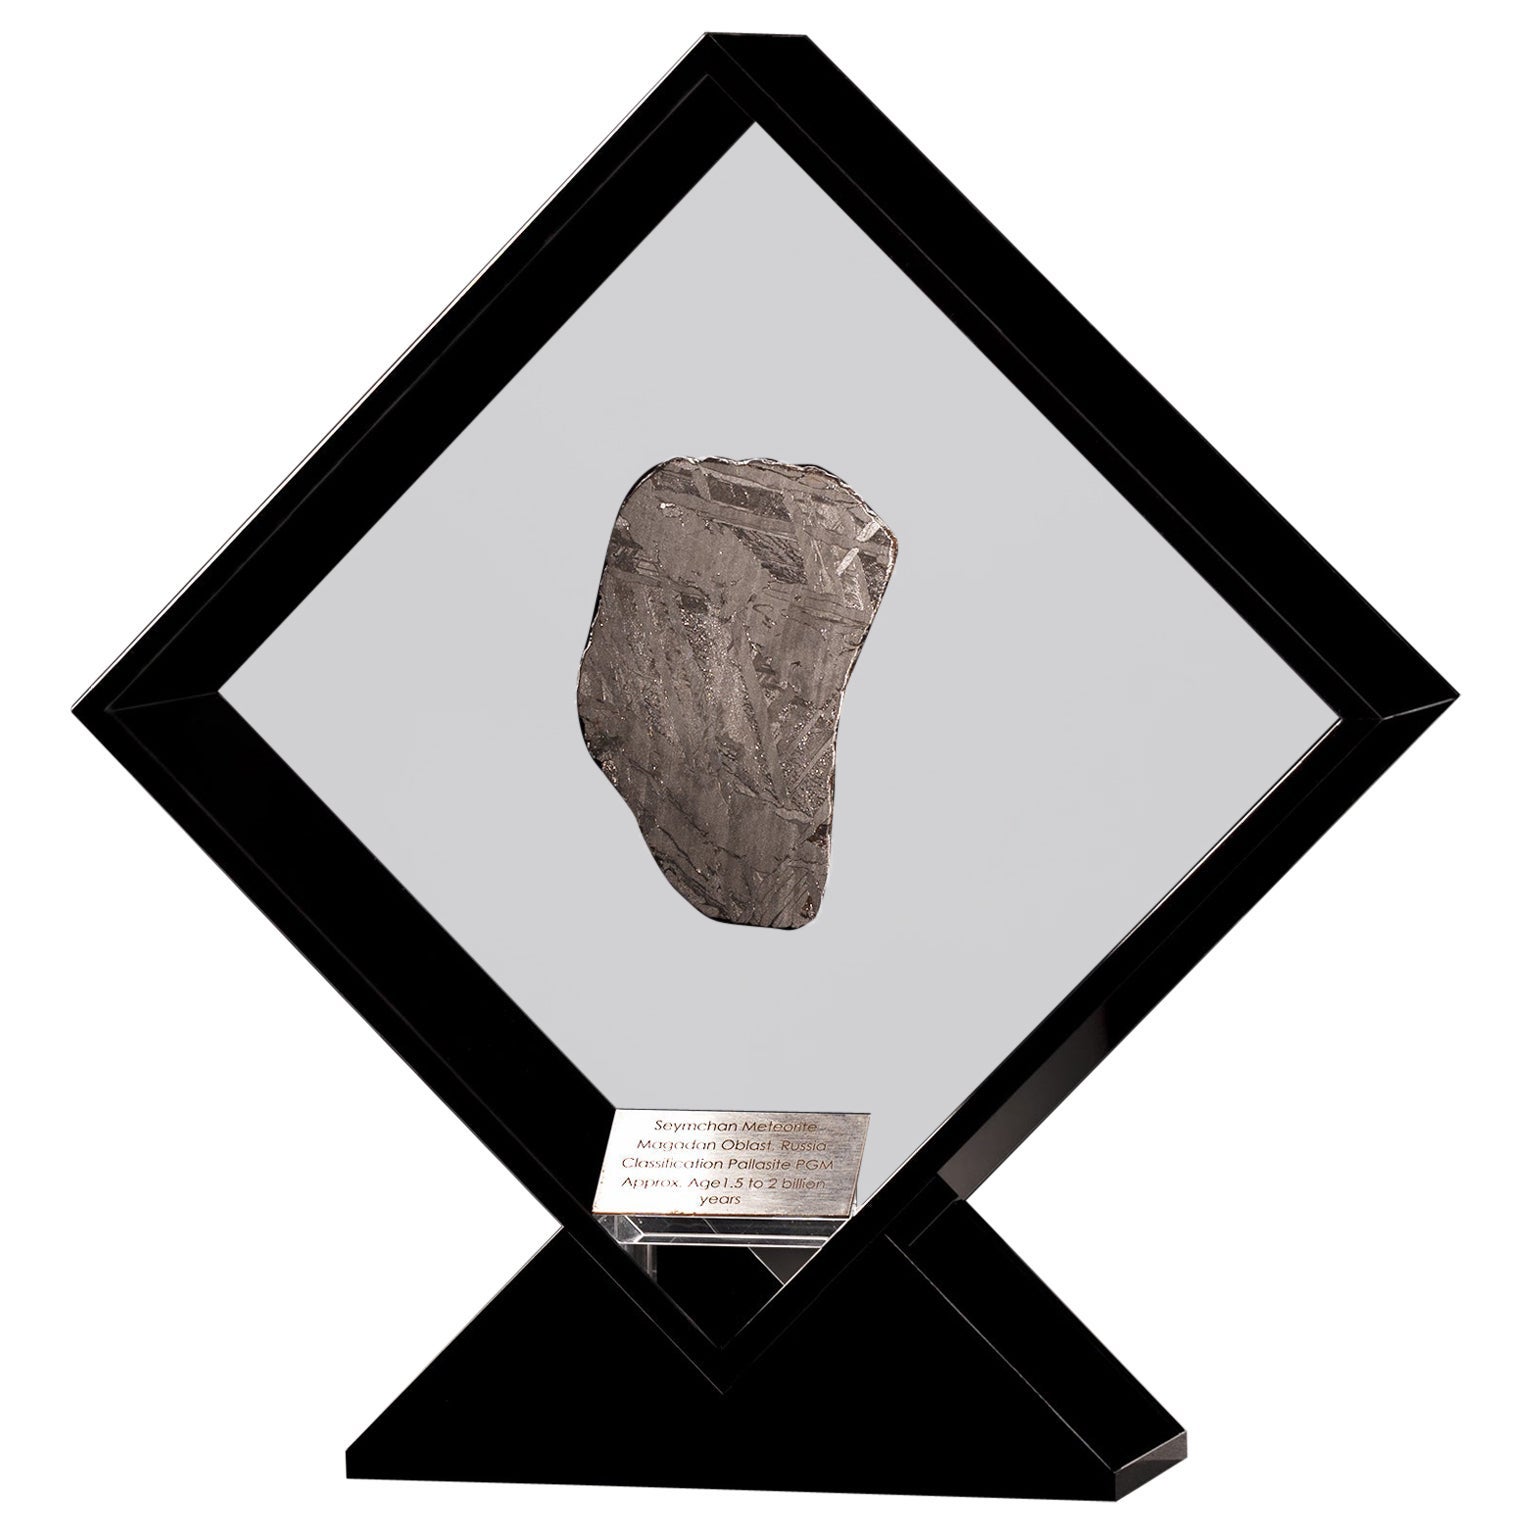 Original Design, Seymchan Meteorite in a Black Acrylic Display